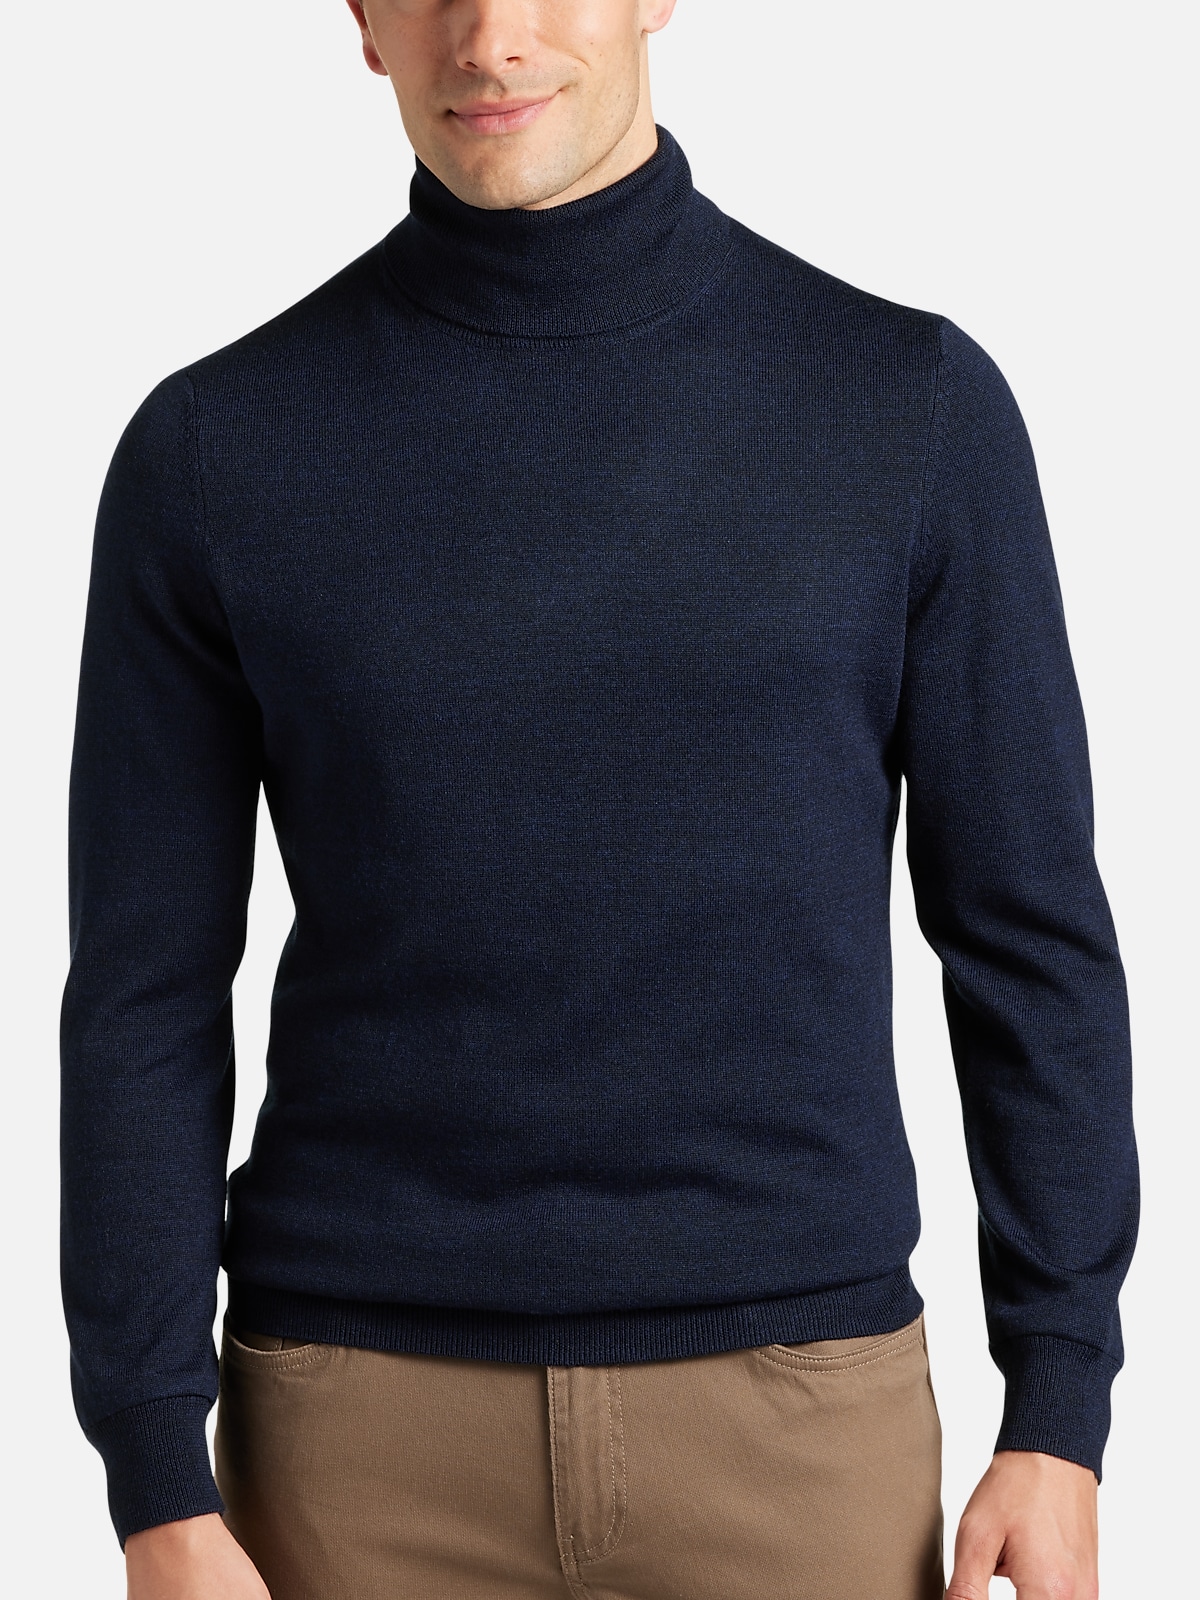 Joseph Abboud Modern Fit Turtleneck Merino Wool Sweater | All Clearance ...